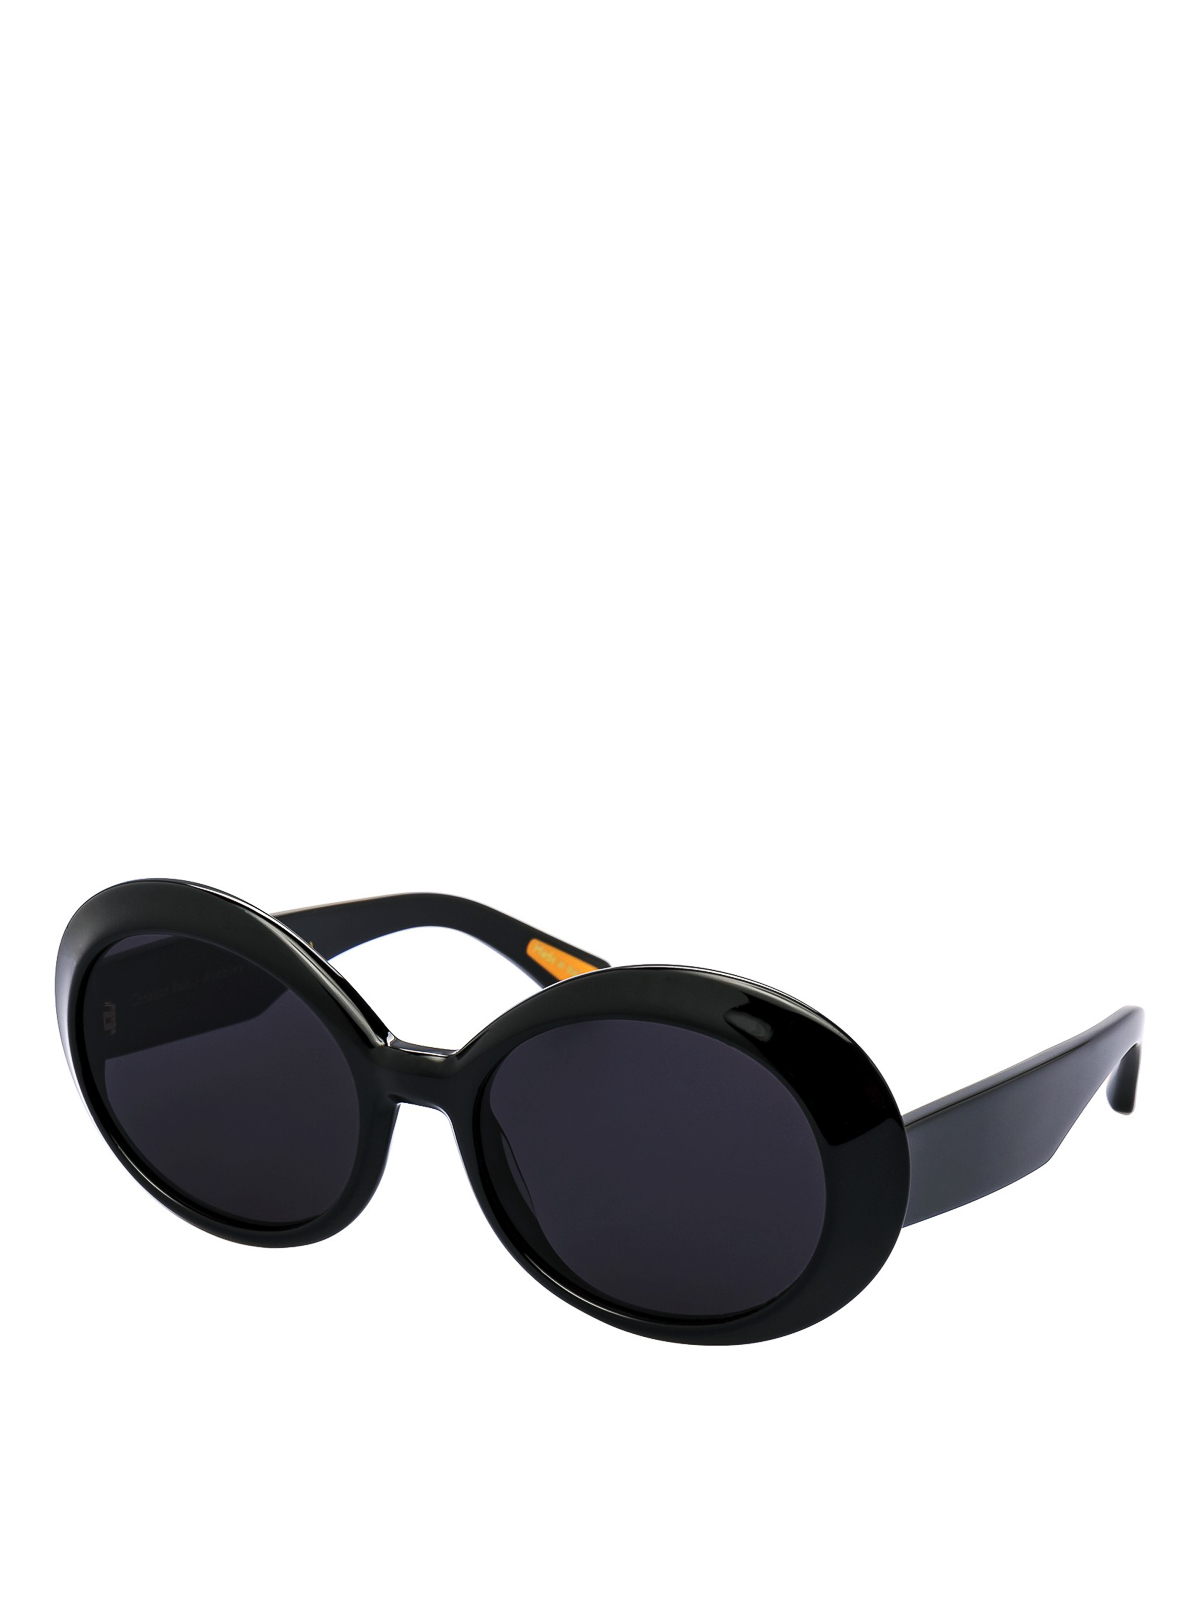 Sunglasses Christian Roth - Archive 1993 sunglasses - CRS00053BLACK